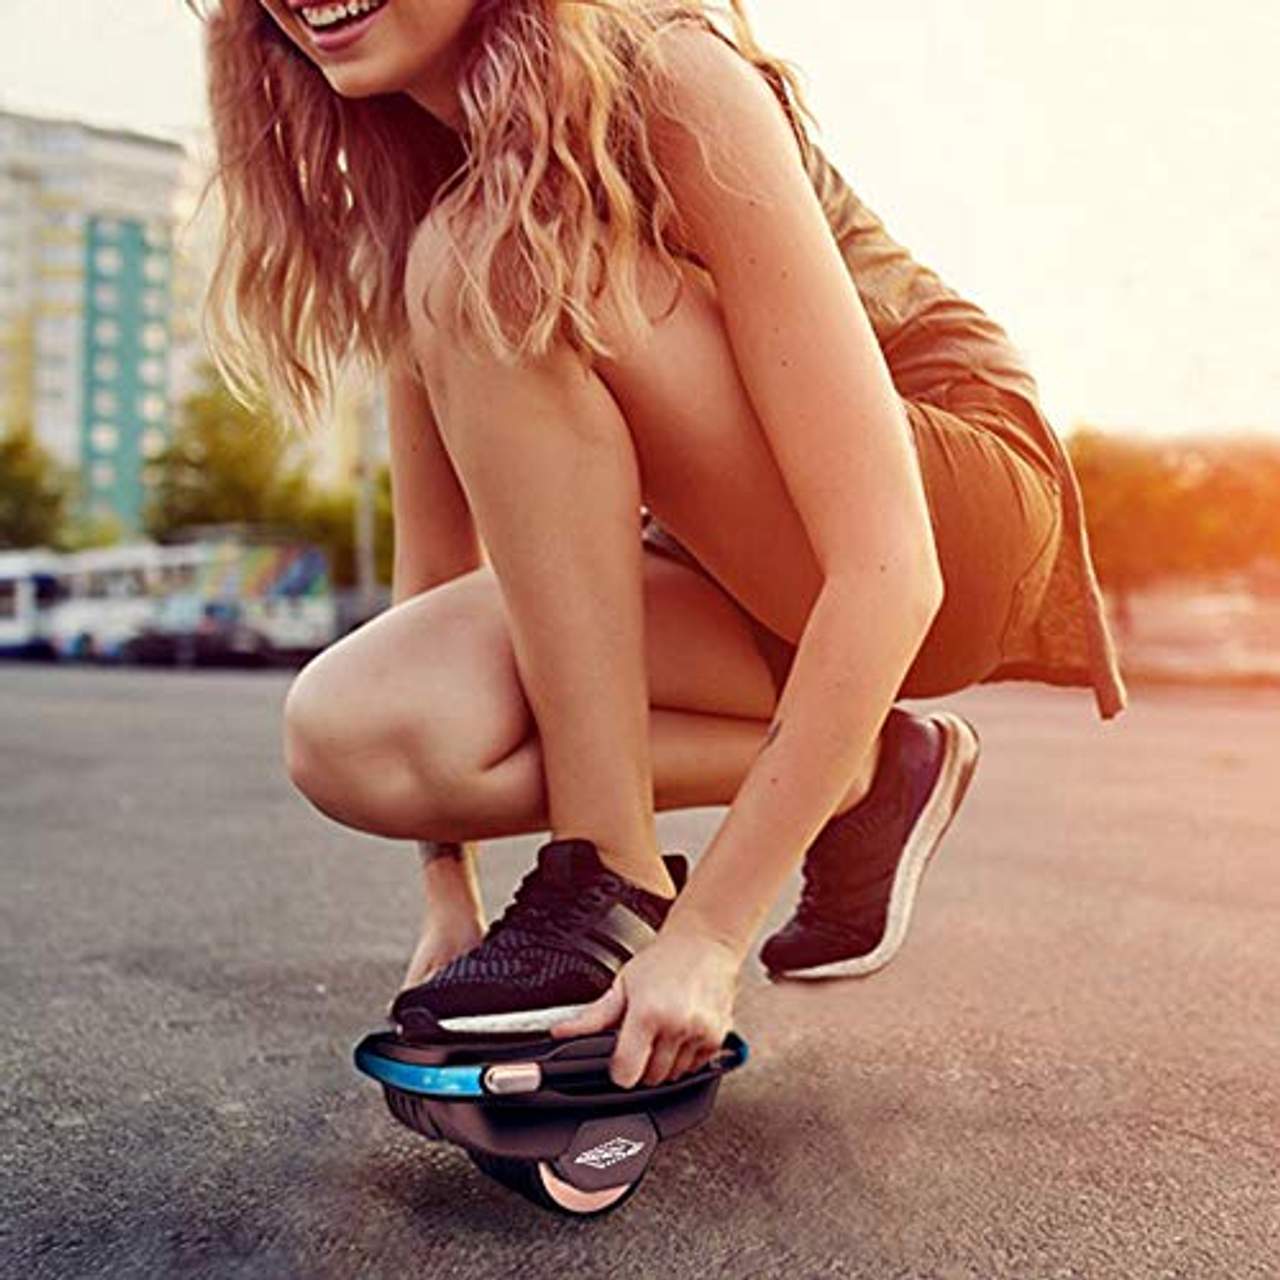 ZYHOO Elektro-Skateboard Selbstausgleich kleine Smart Hoverboard-Hovershoes